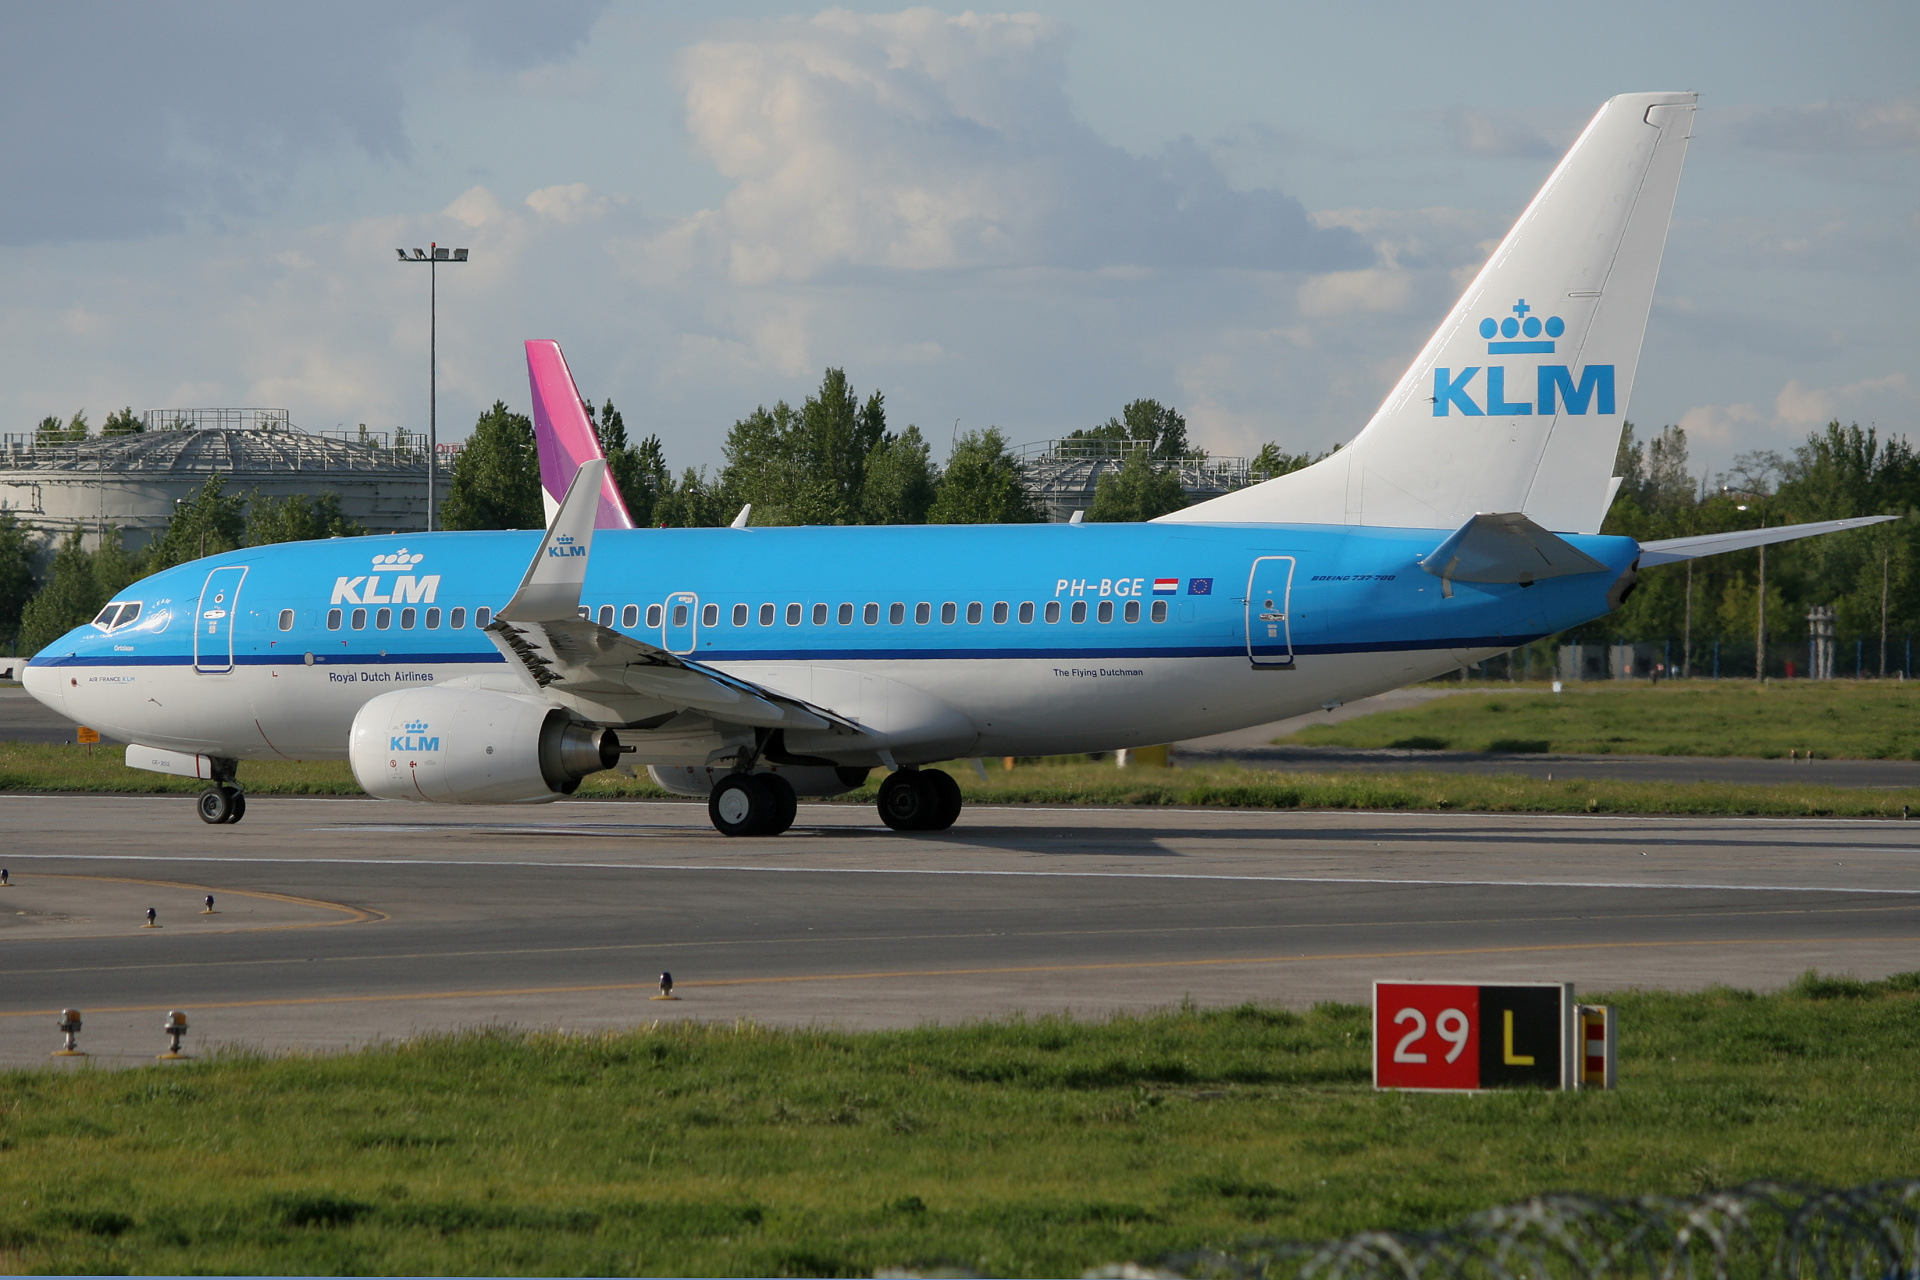 PH-BGE (Aircraft » EPWA Spotting » Boeing 737-700 » KLM Royal Dutch Airlines)